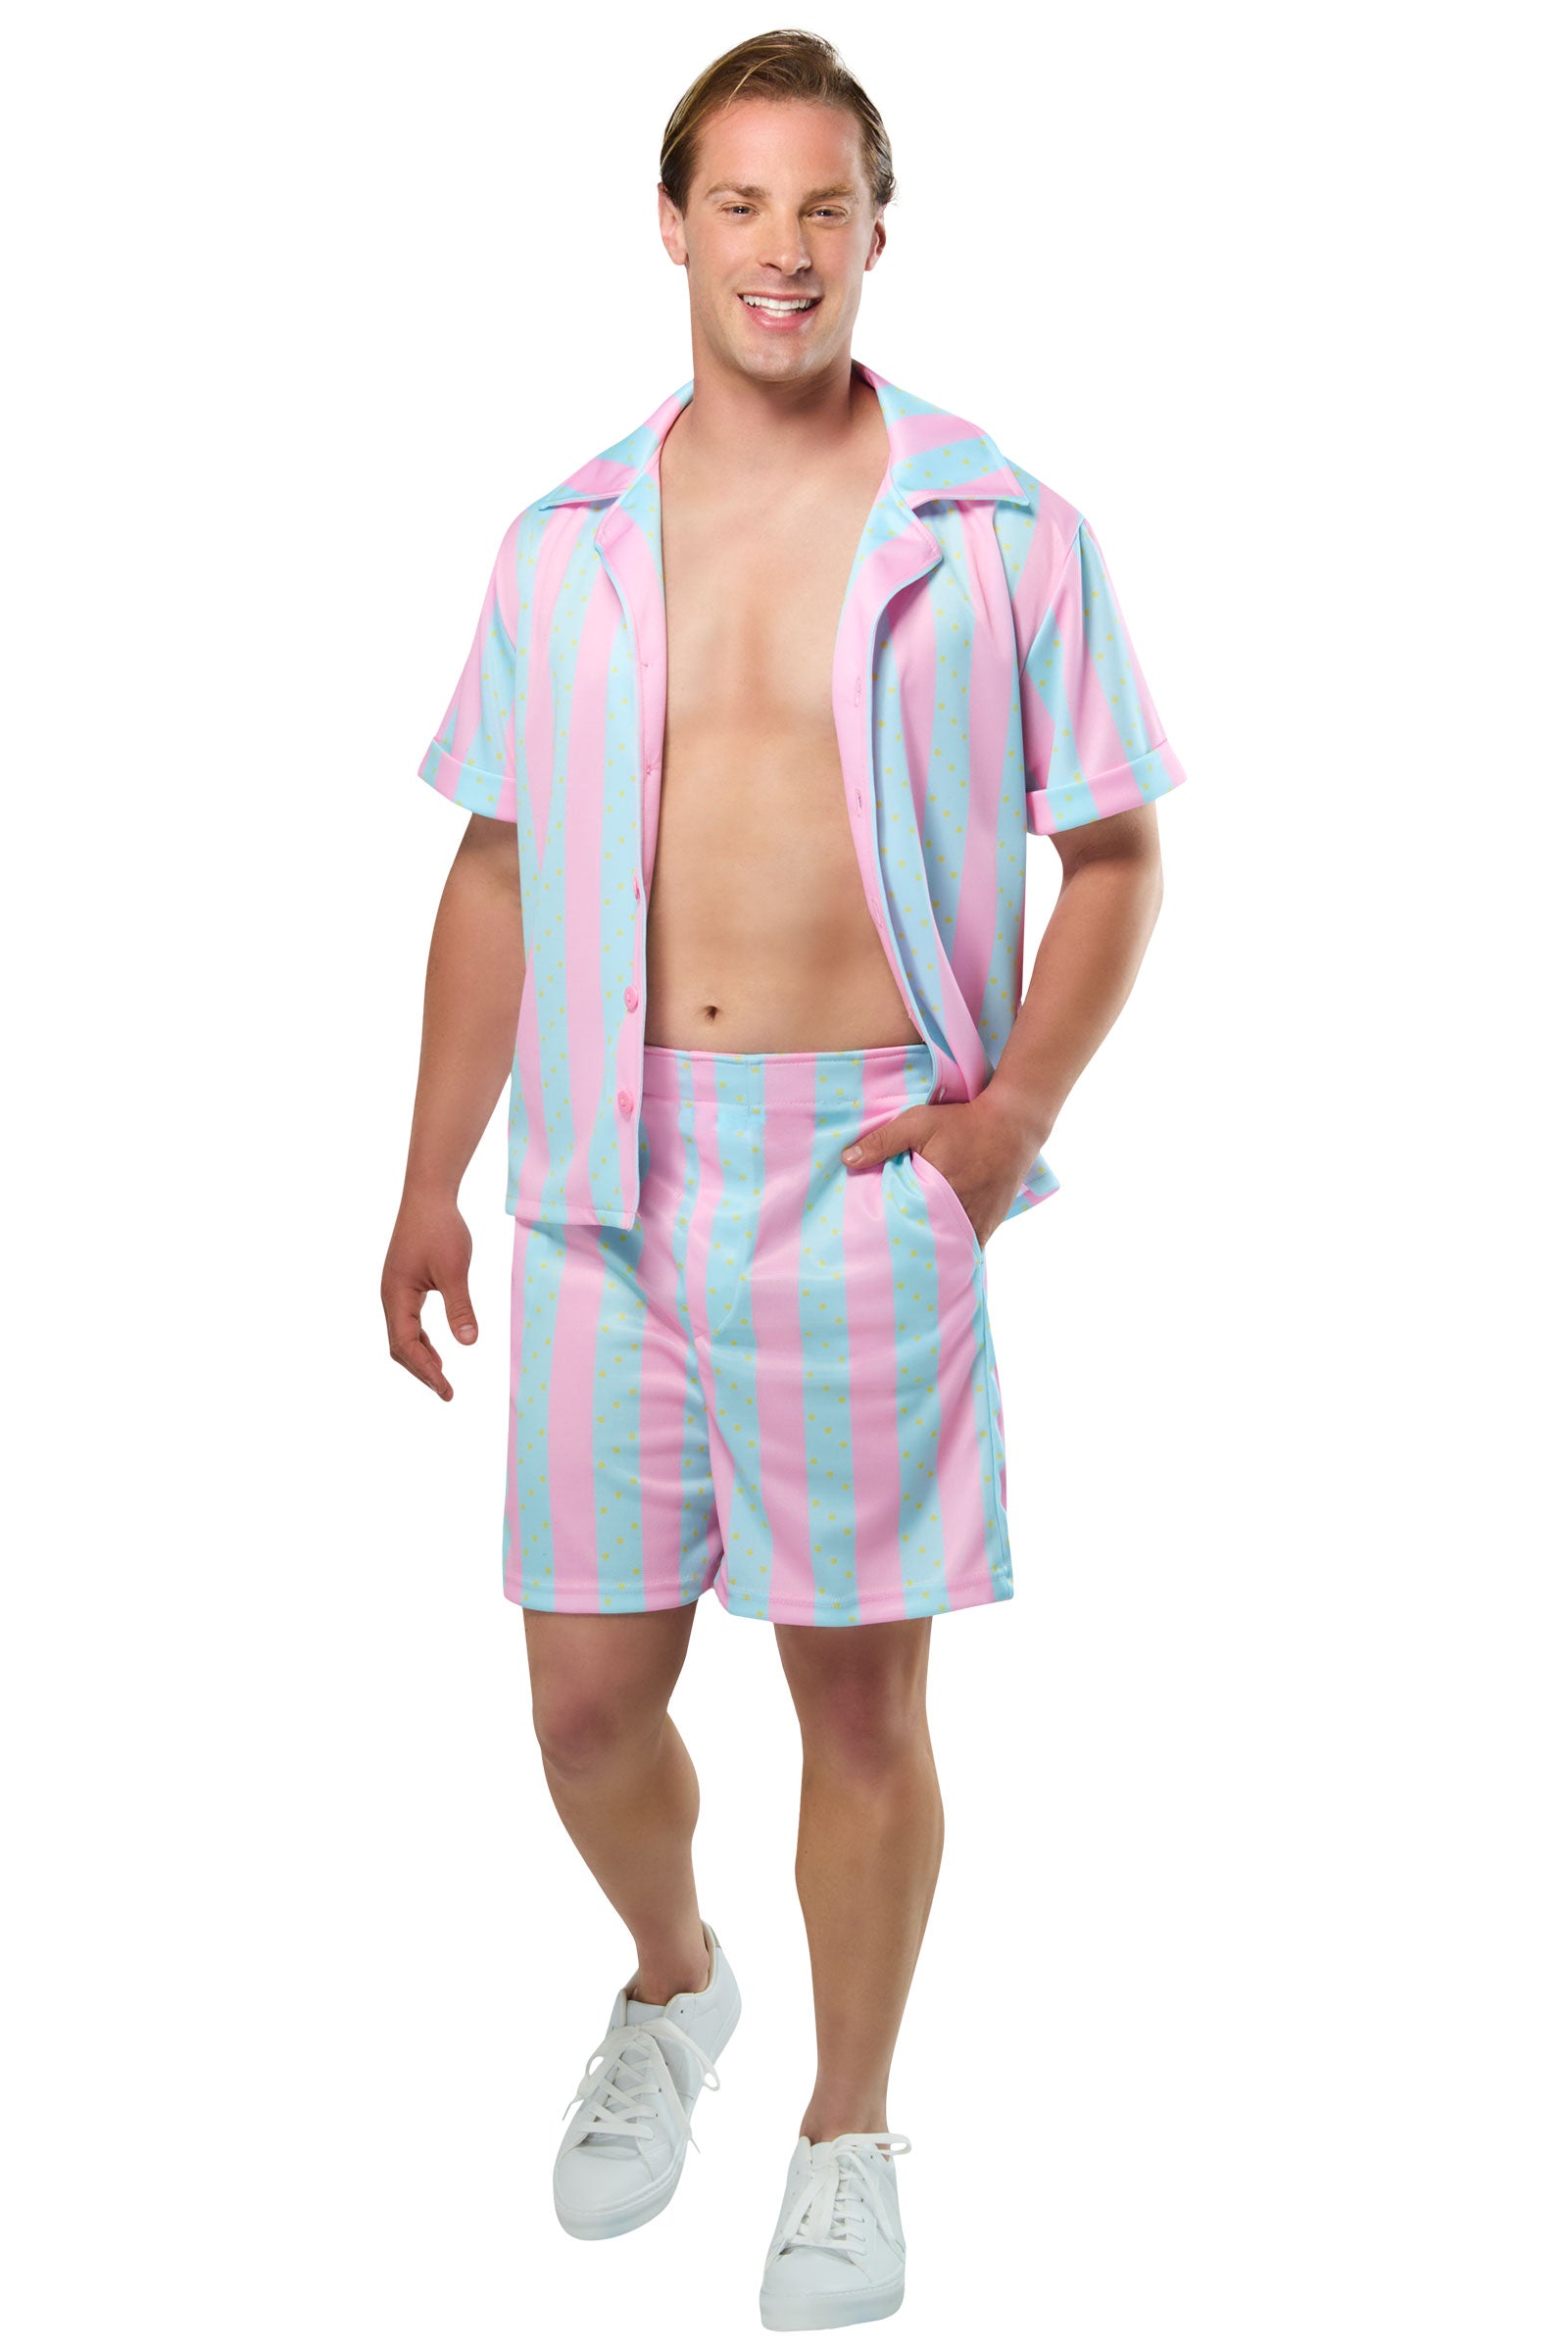 Beach Ken Adult Costume